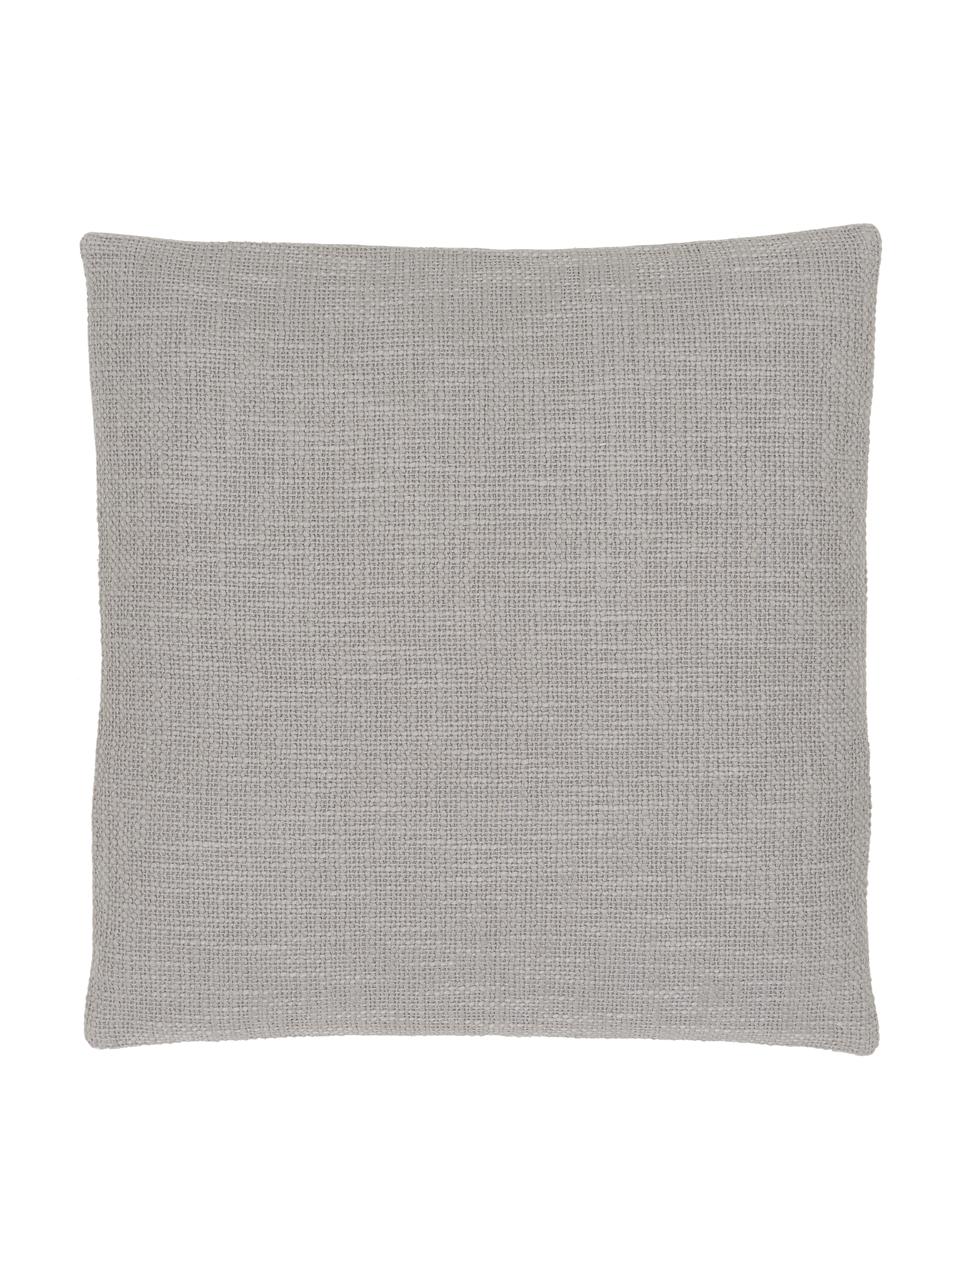 Kissenhülle Anise in Grau, 100% Baumwolle, Grau, B 45 x L 45 cm